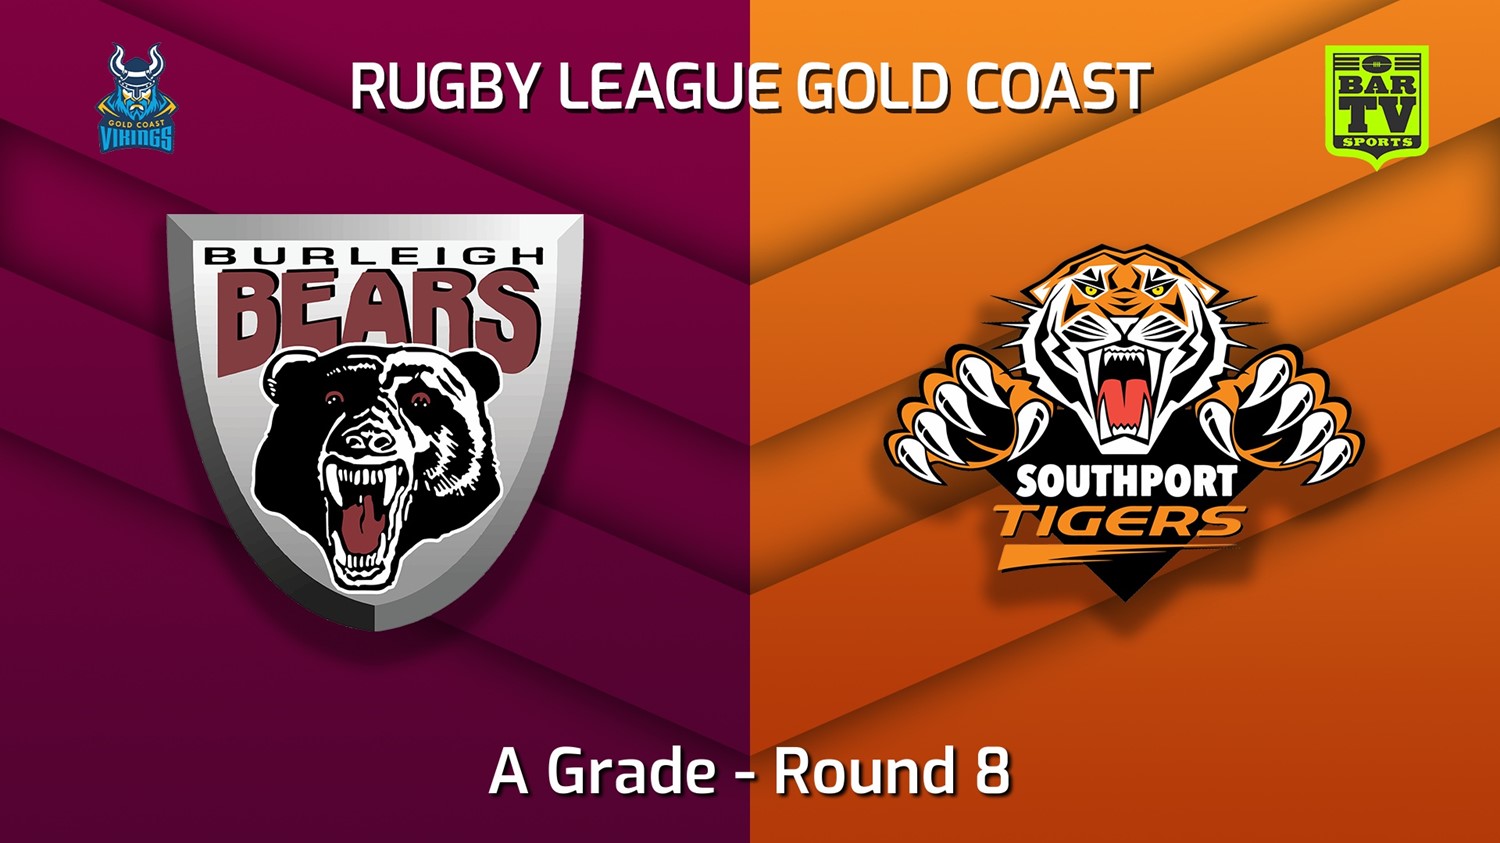 220527-Gold Coast Round 8 - A Grade - Burleigh Bears v Southport Tigers Minigame Slate Image